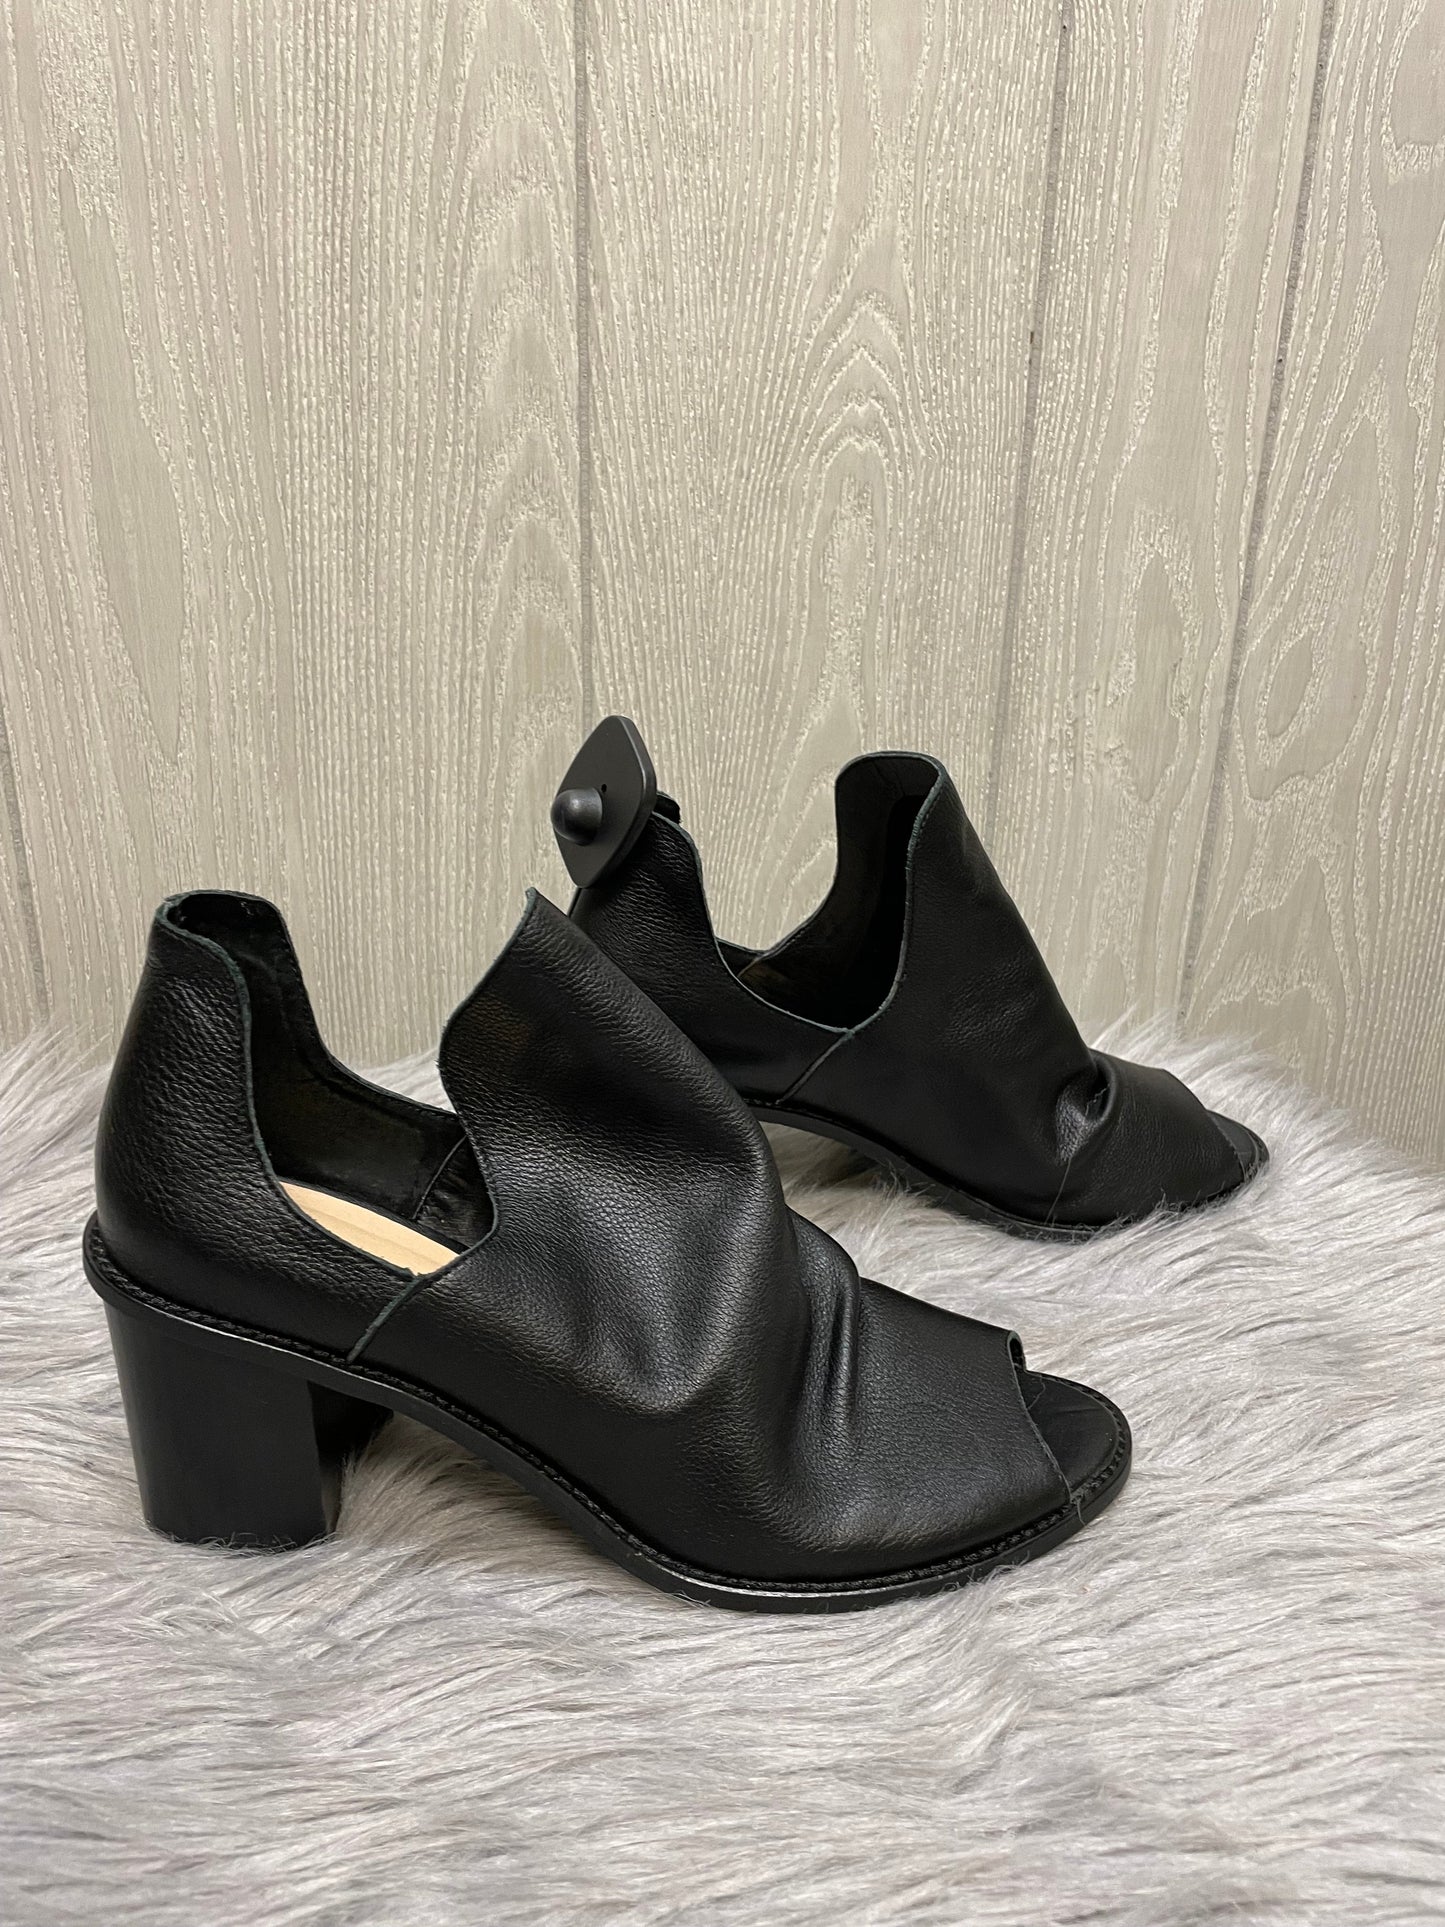 Black Shoes Heels Block Chinese Laundry, Size 10